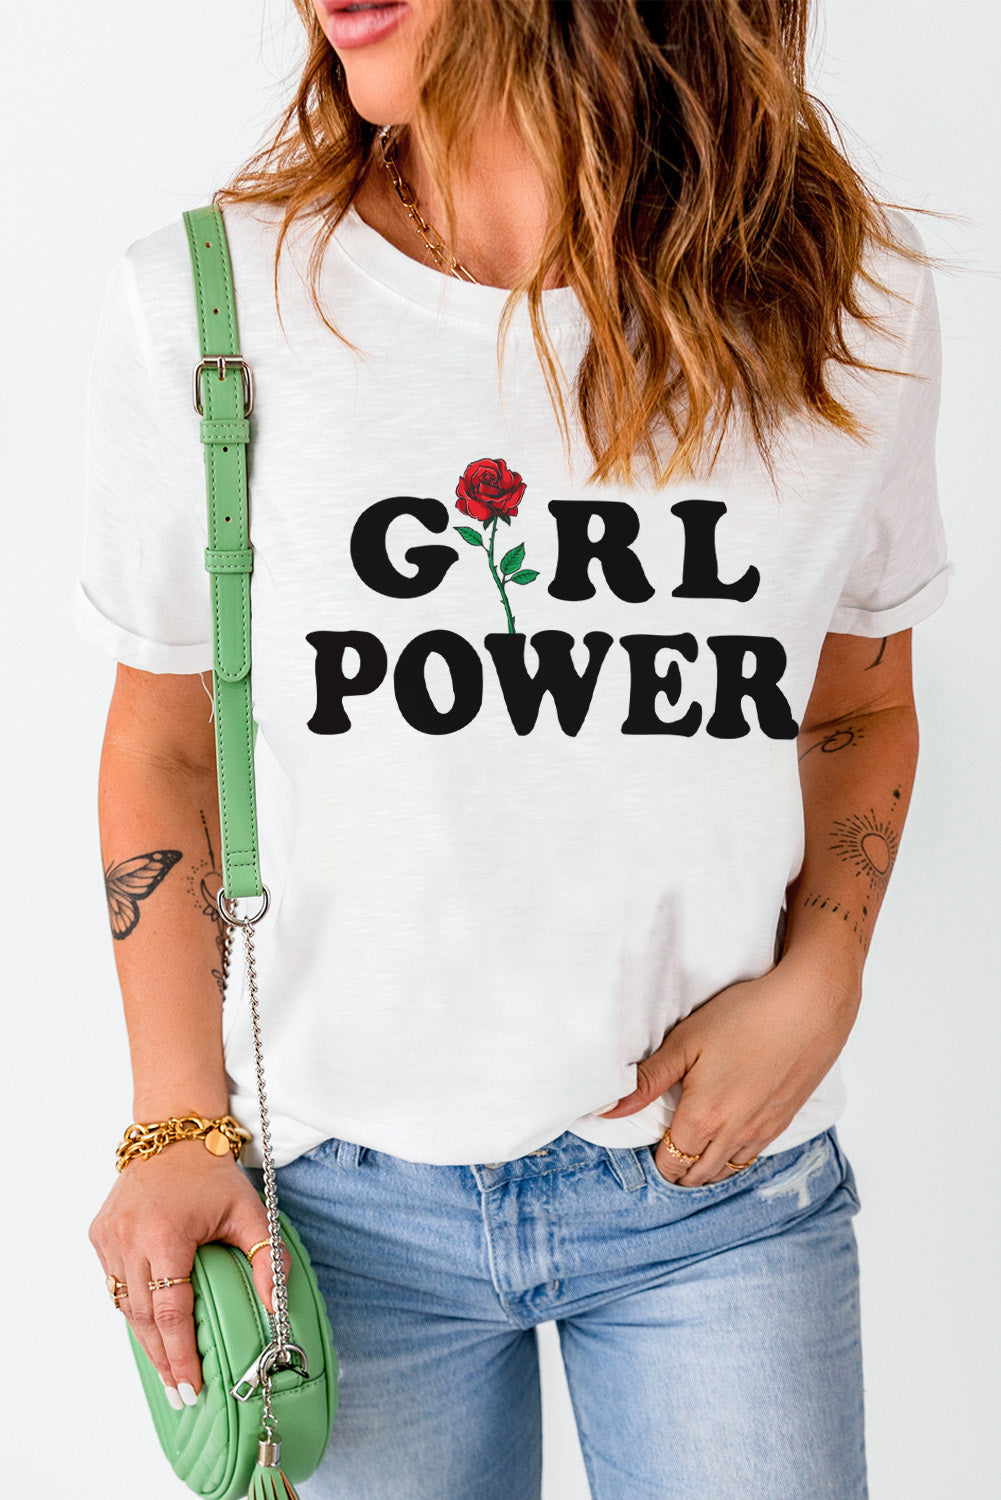 GIRL POWER Rose Graphic Tee Shirt Trendsi